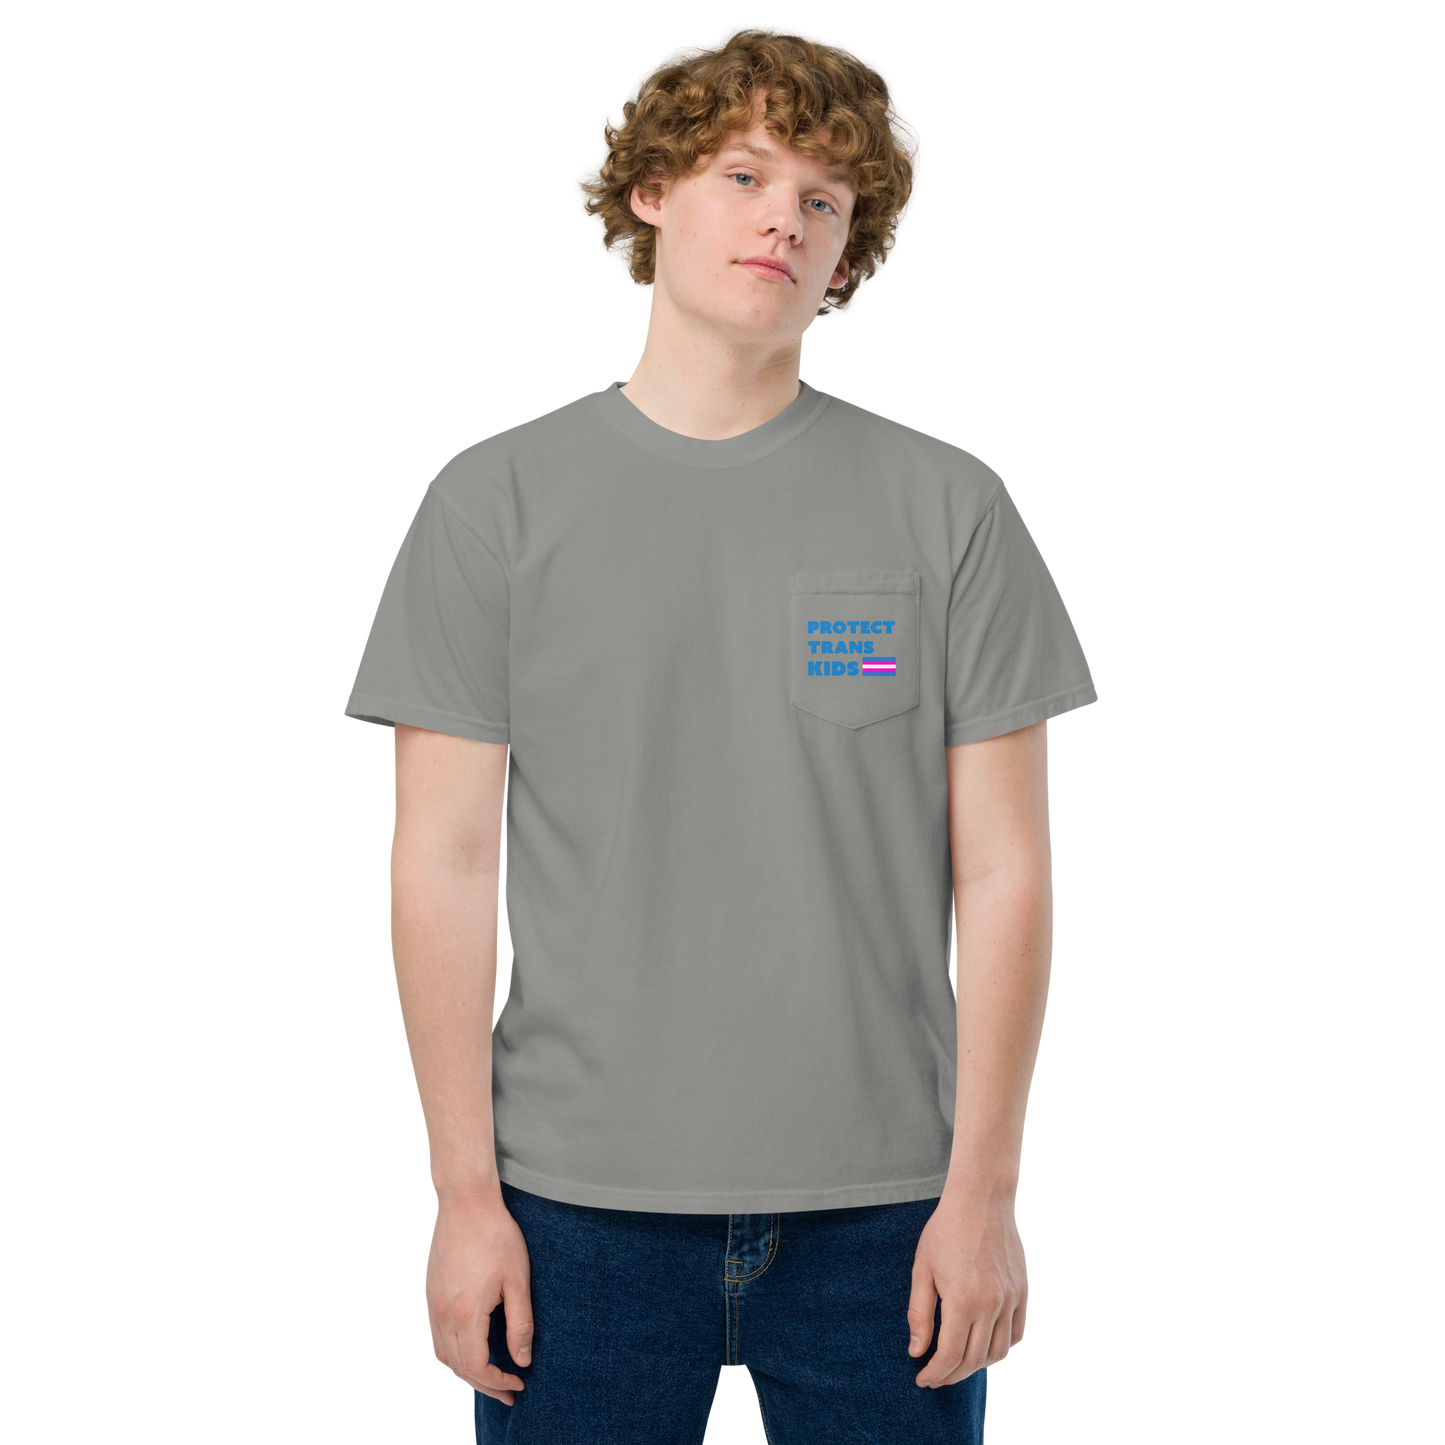 Protect Trans Kids! Unisex garment-dyed pocket t-shirt